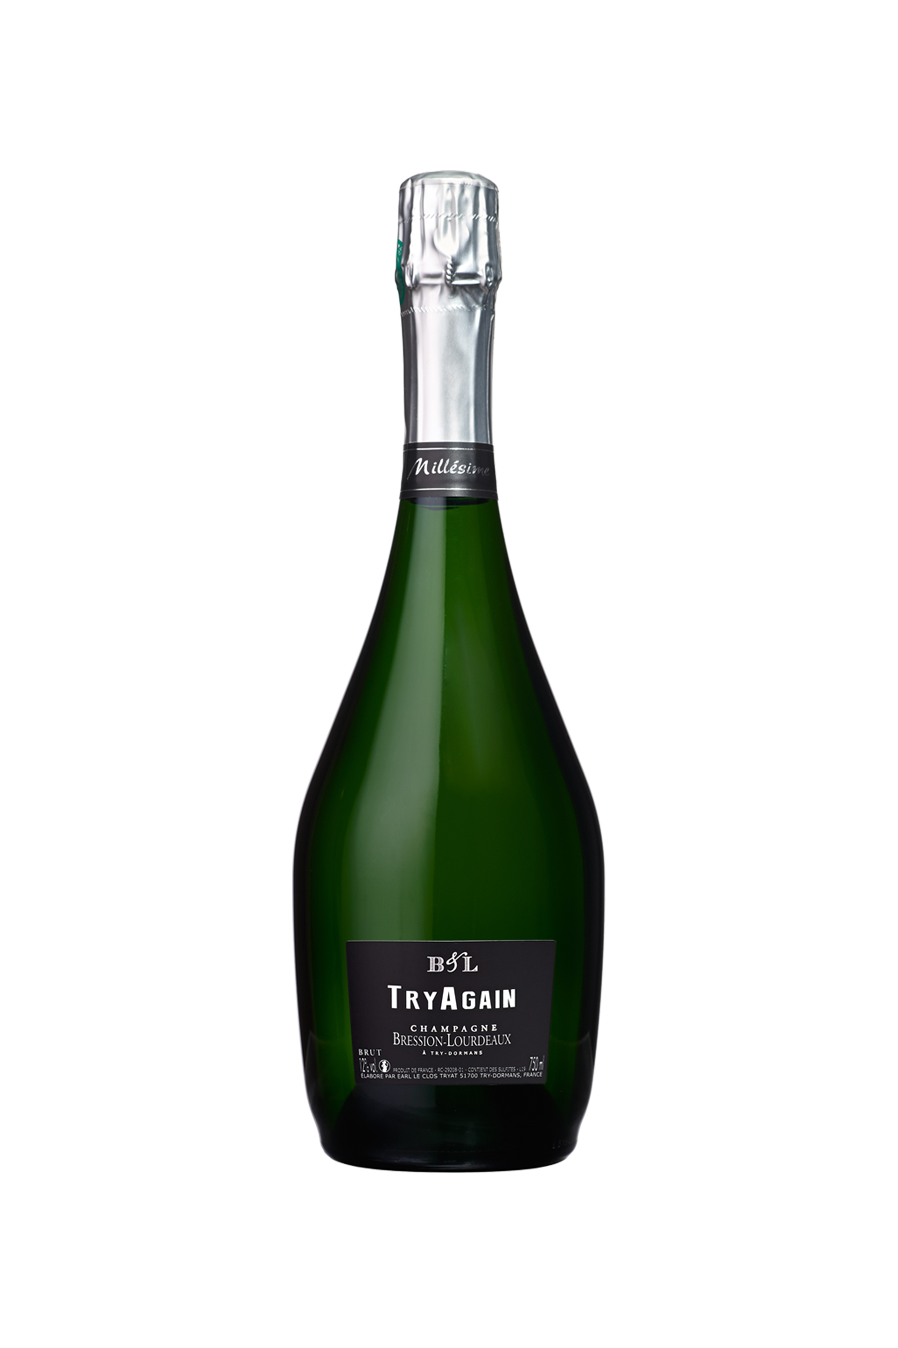 Poisson – Stahel champagnes